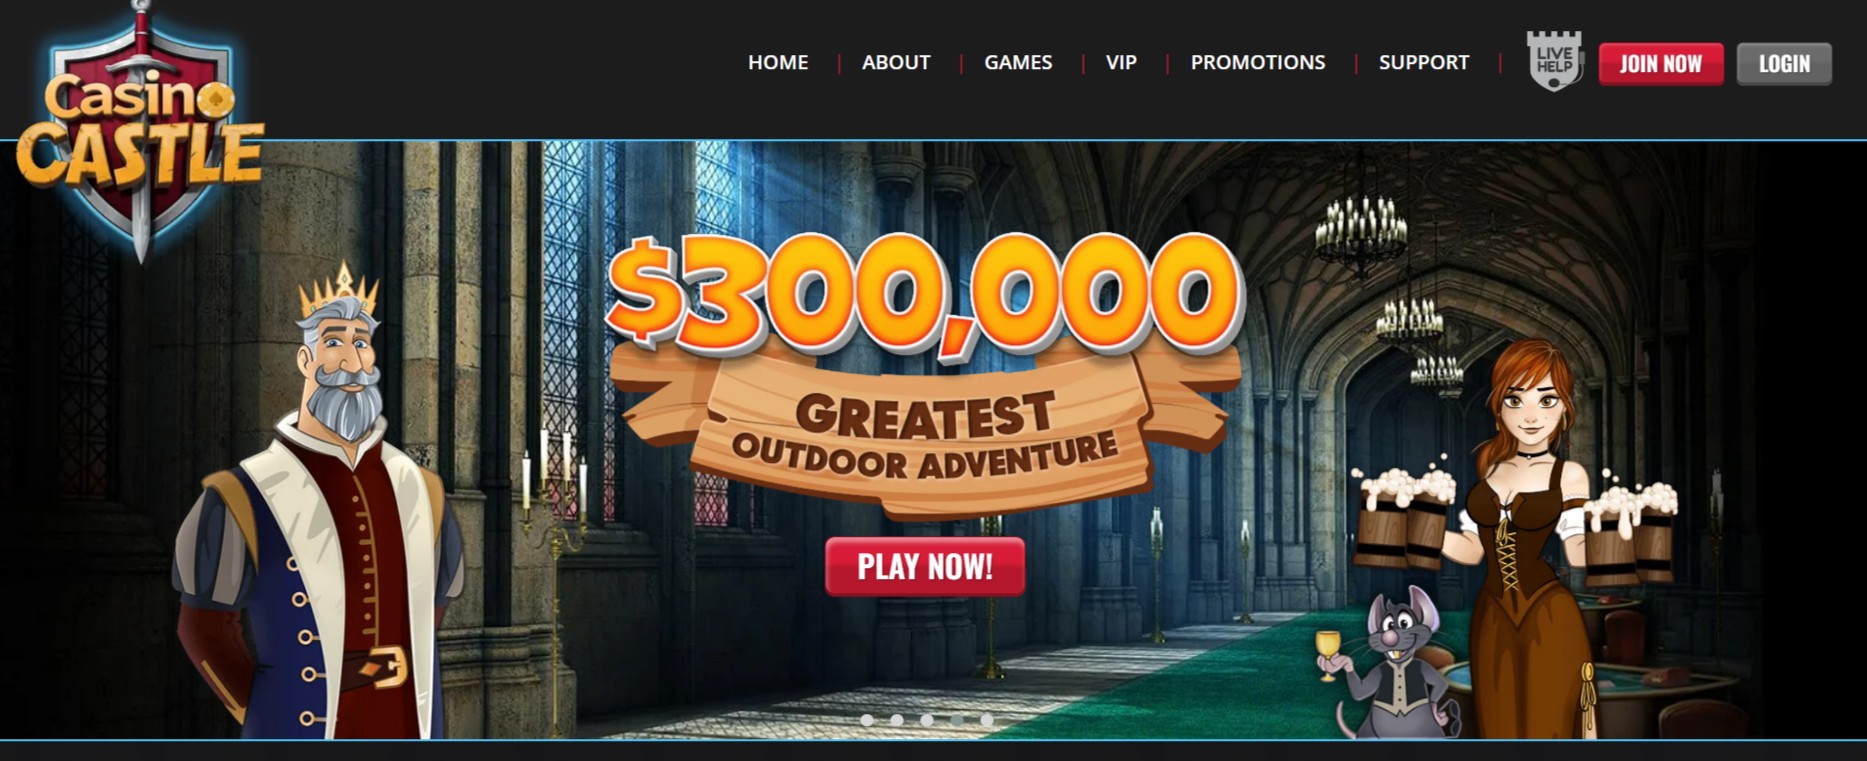 Casino castle homepage screenshot